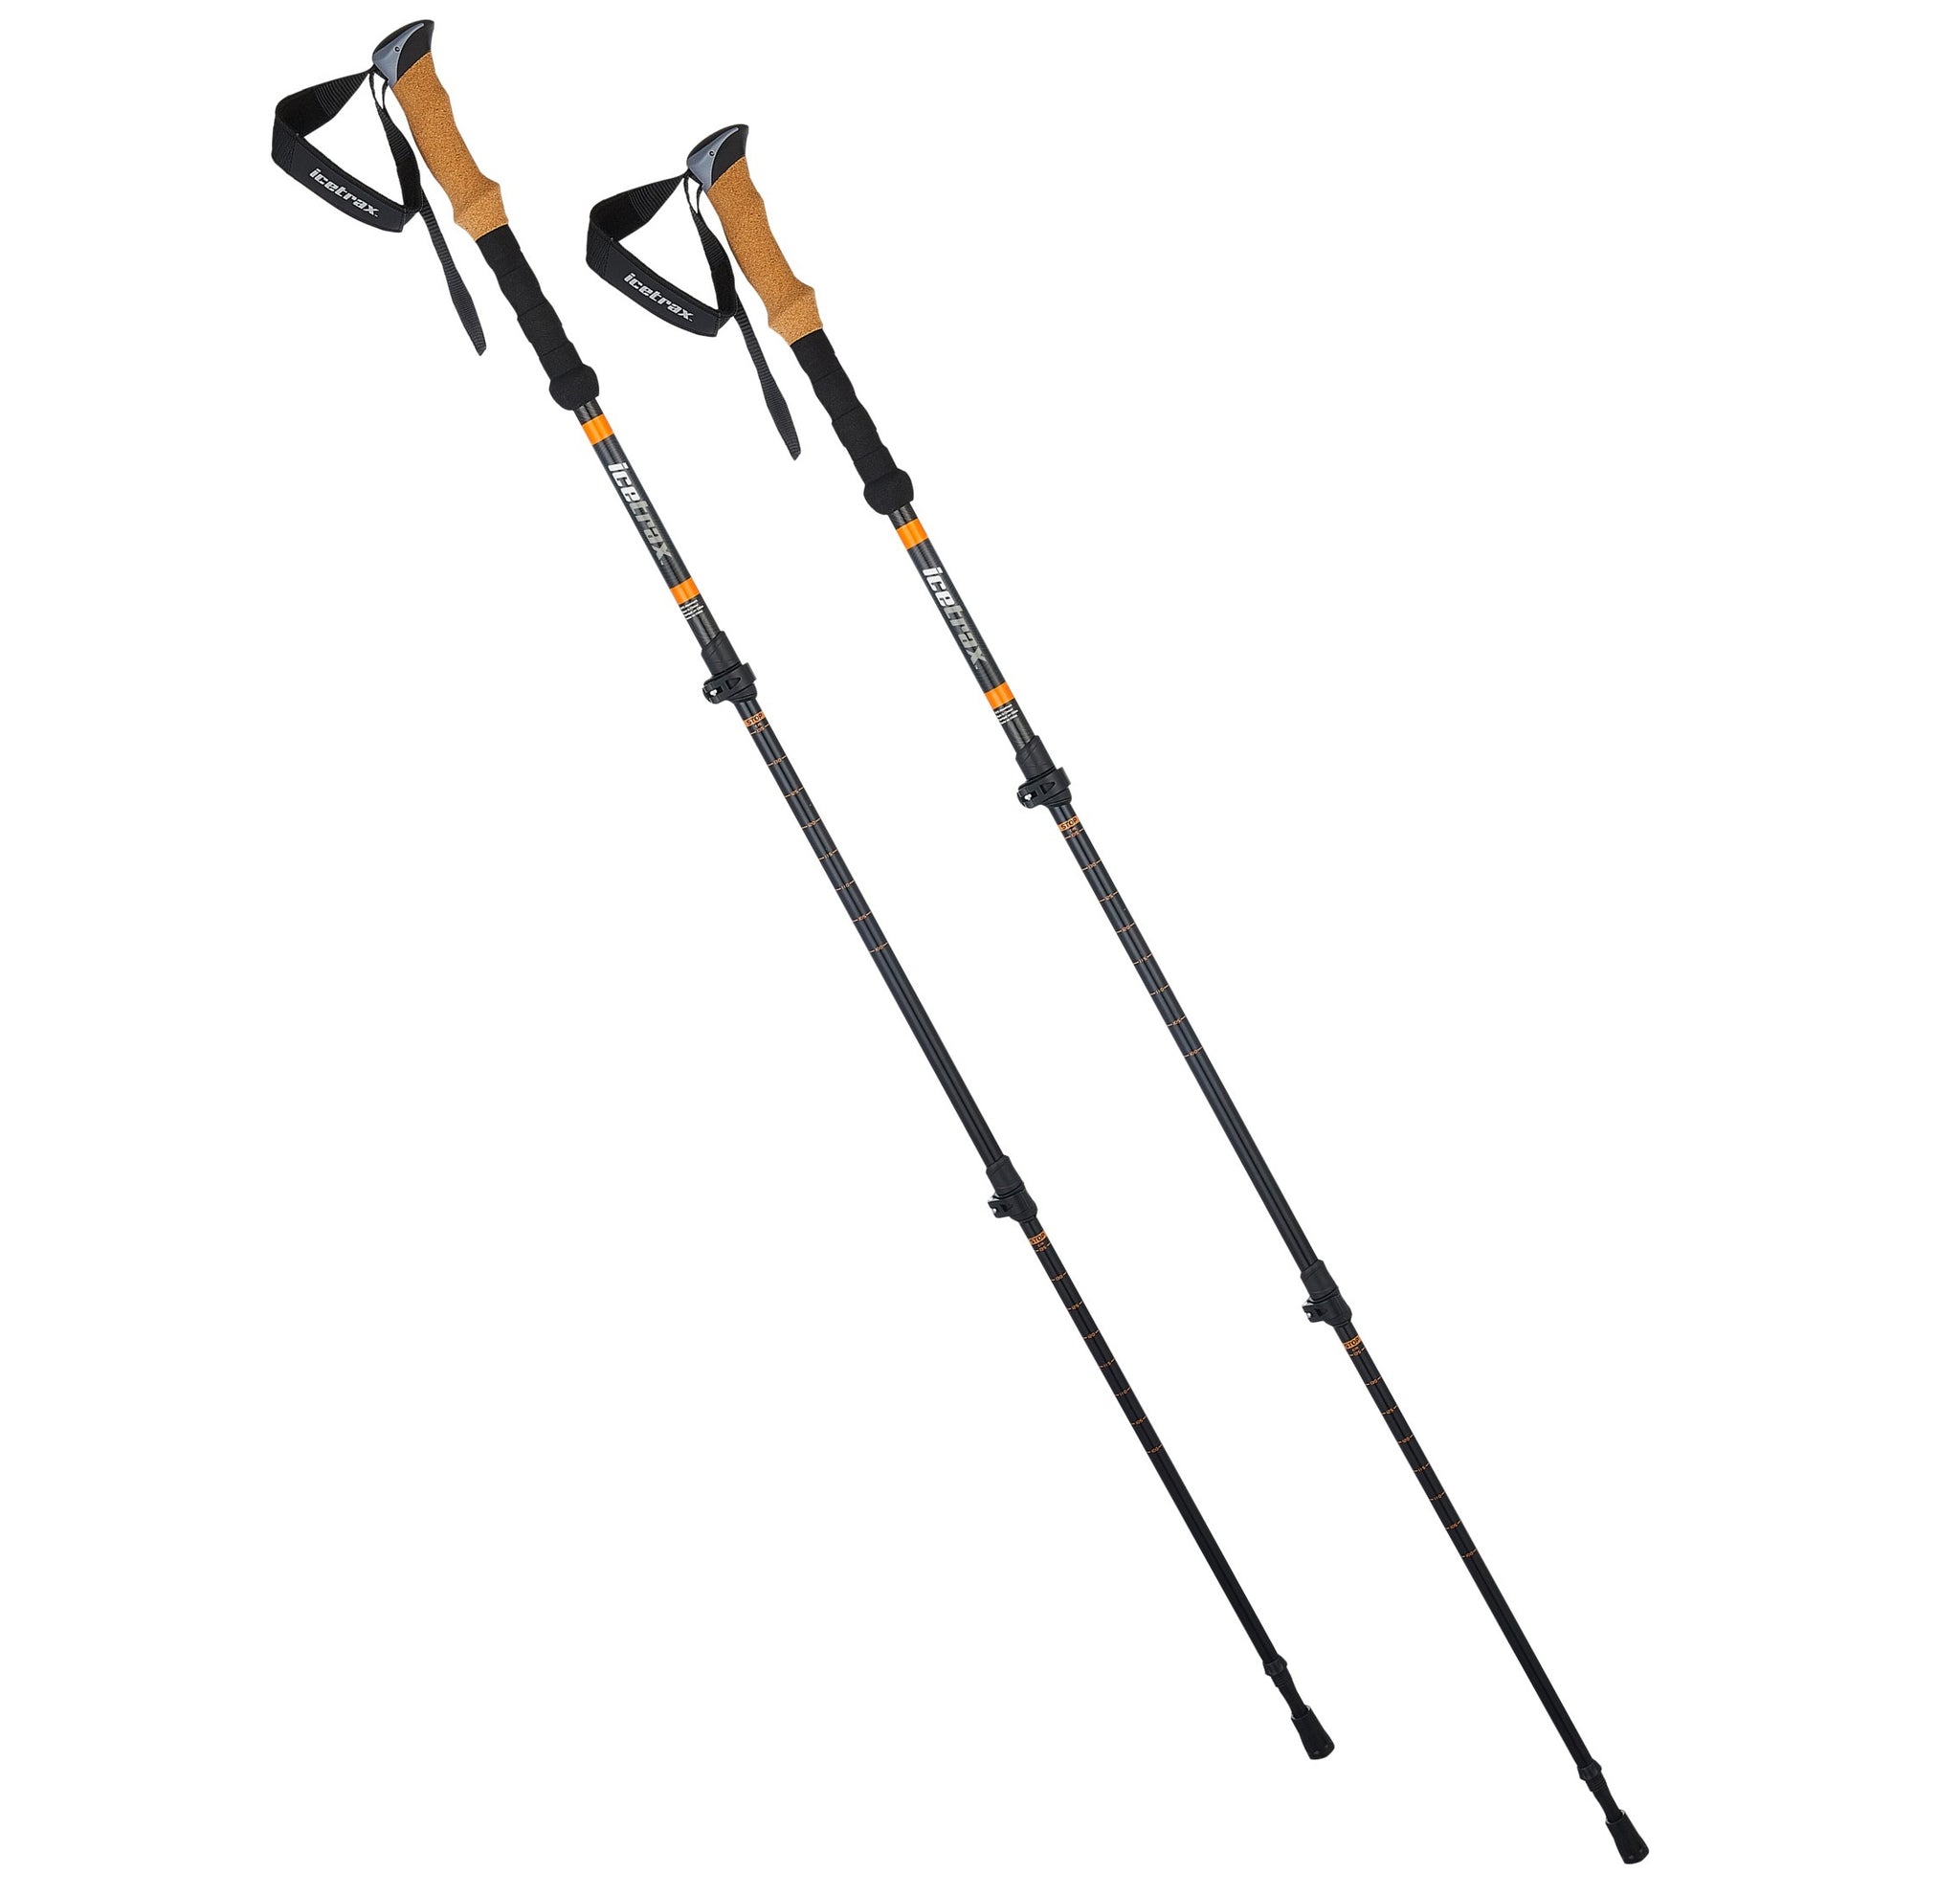 Foxelli Aluminum Trekking Poles - Walking Hiking Sticks